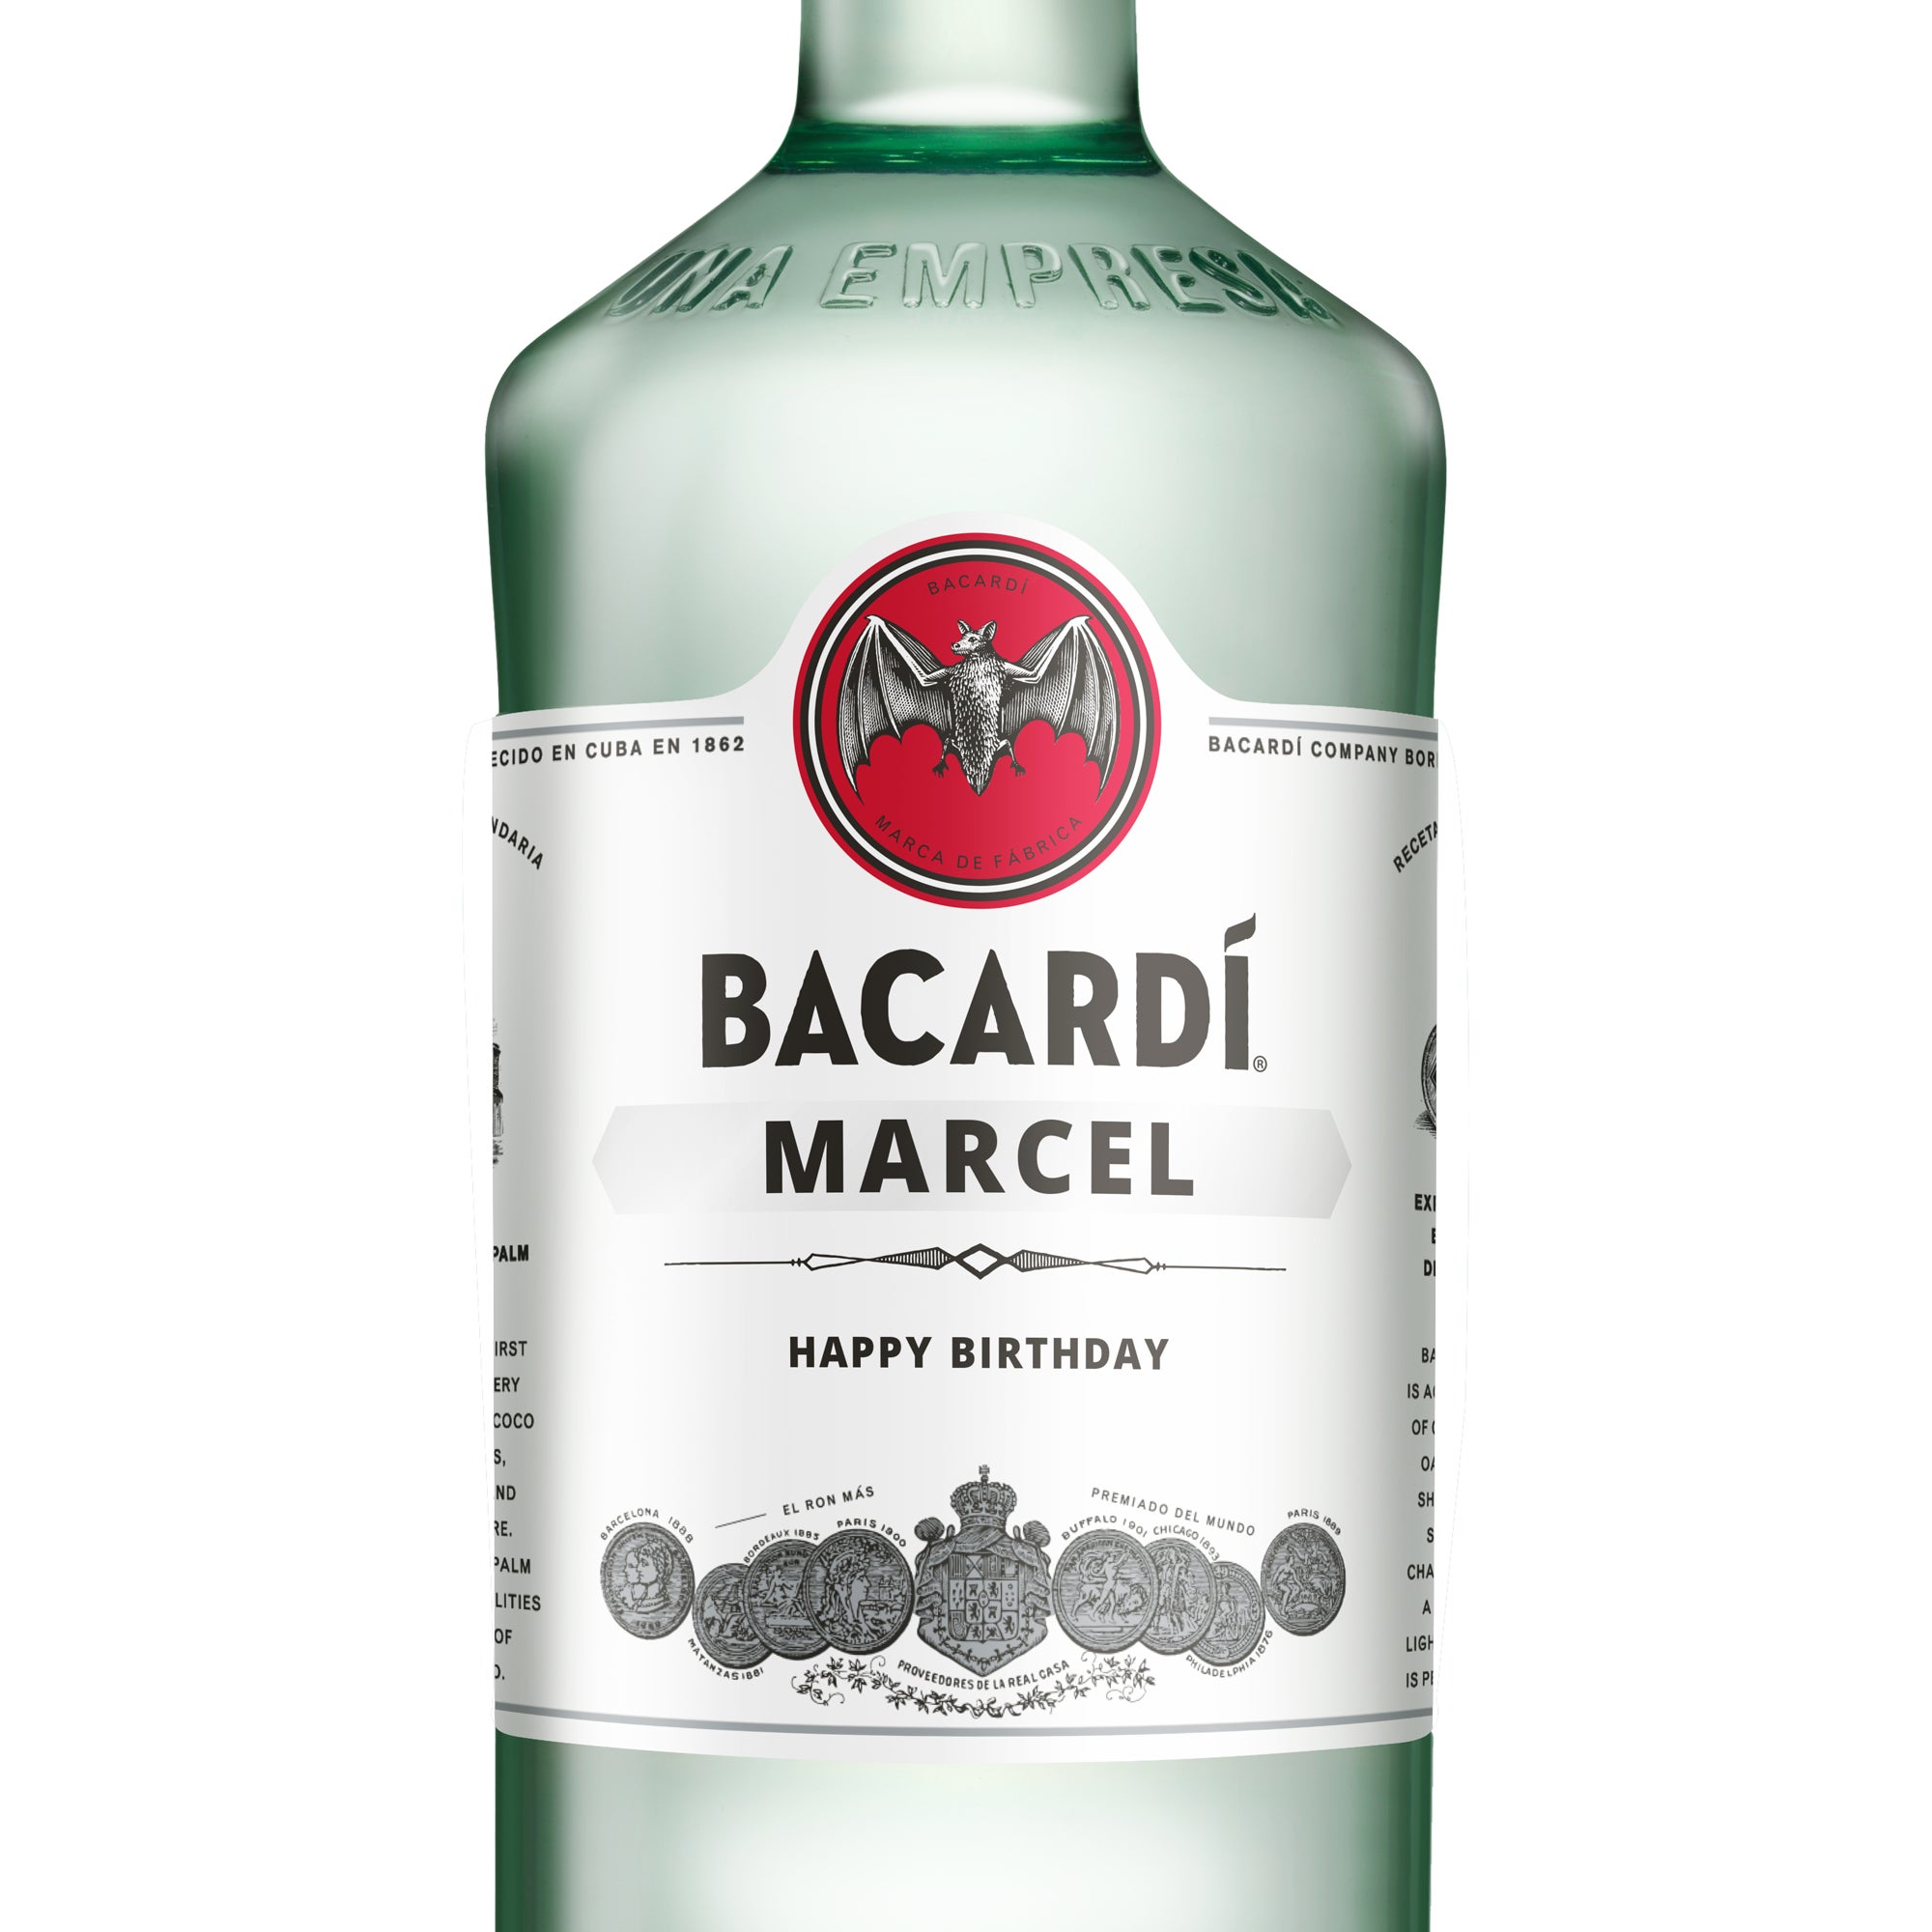 Personalised rum gift - Bacardi - Carta Blanca - 1000 ml - Printed label